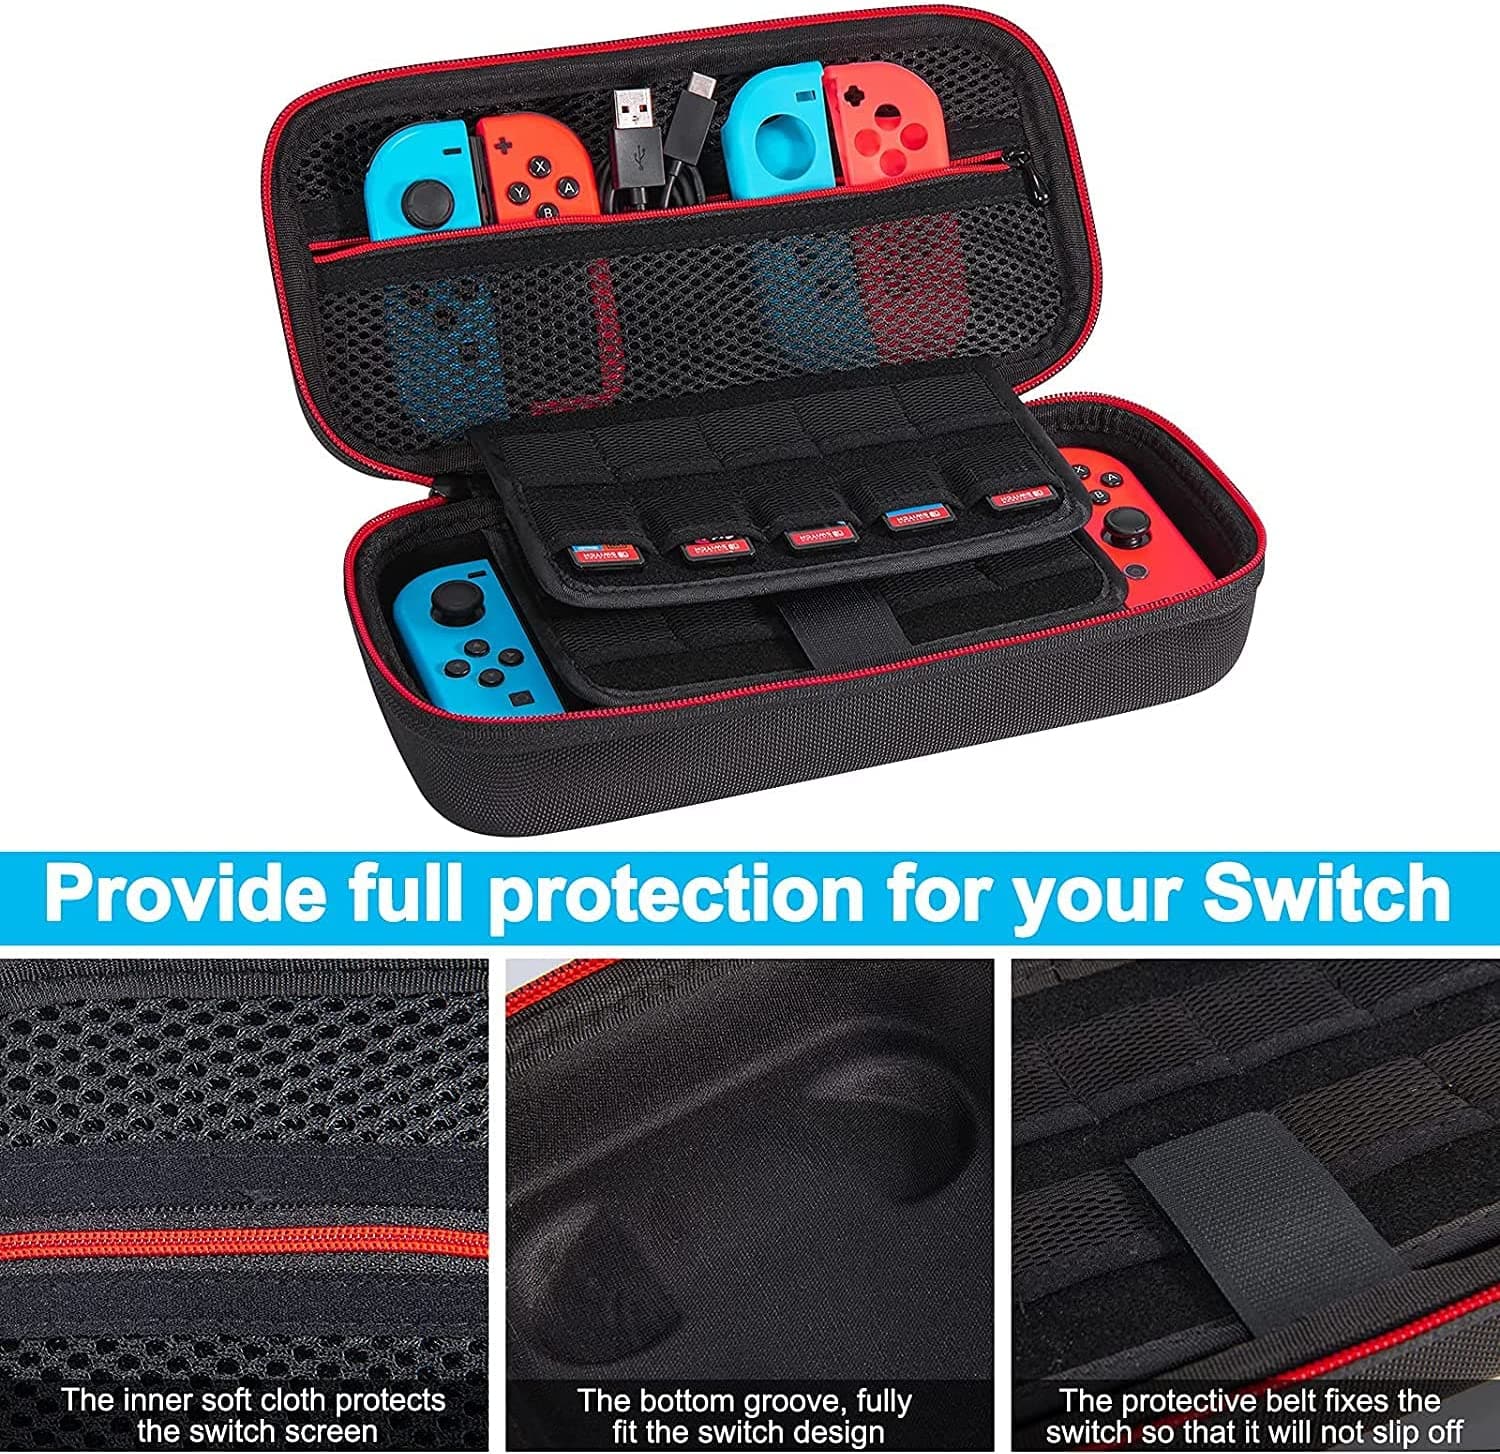 Younik Travel Case Nintendo Switch Carrying Case - Black